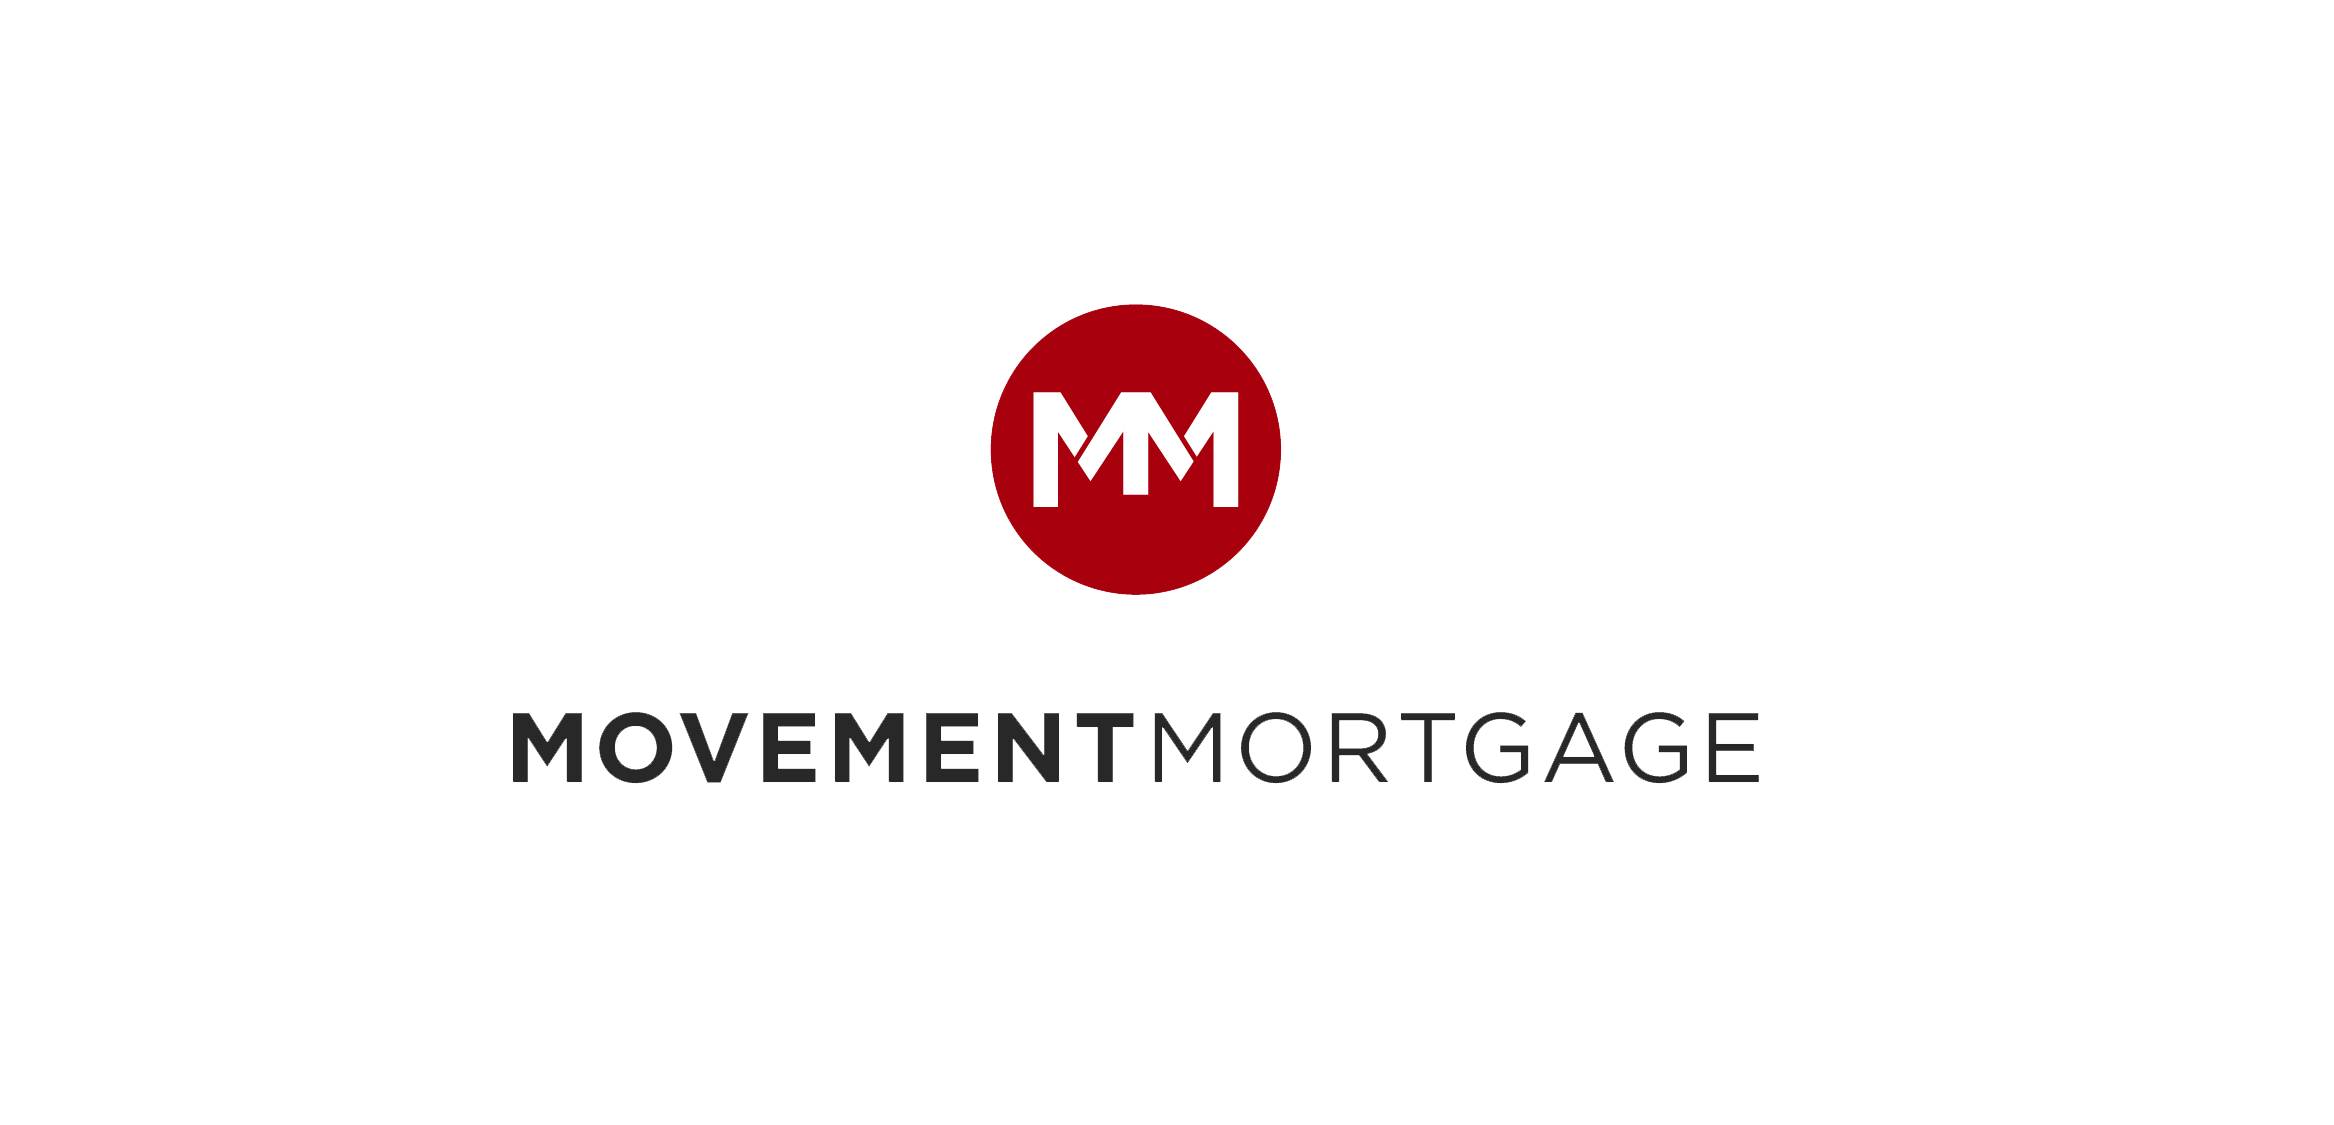 Movement Mortgage Logo - Movement Mortgage